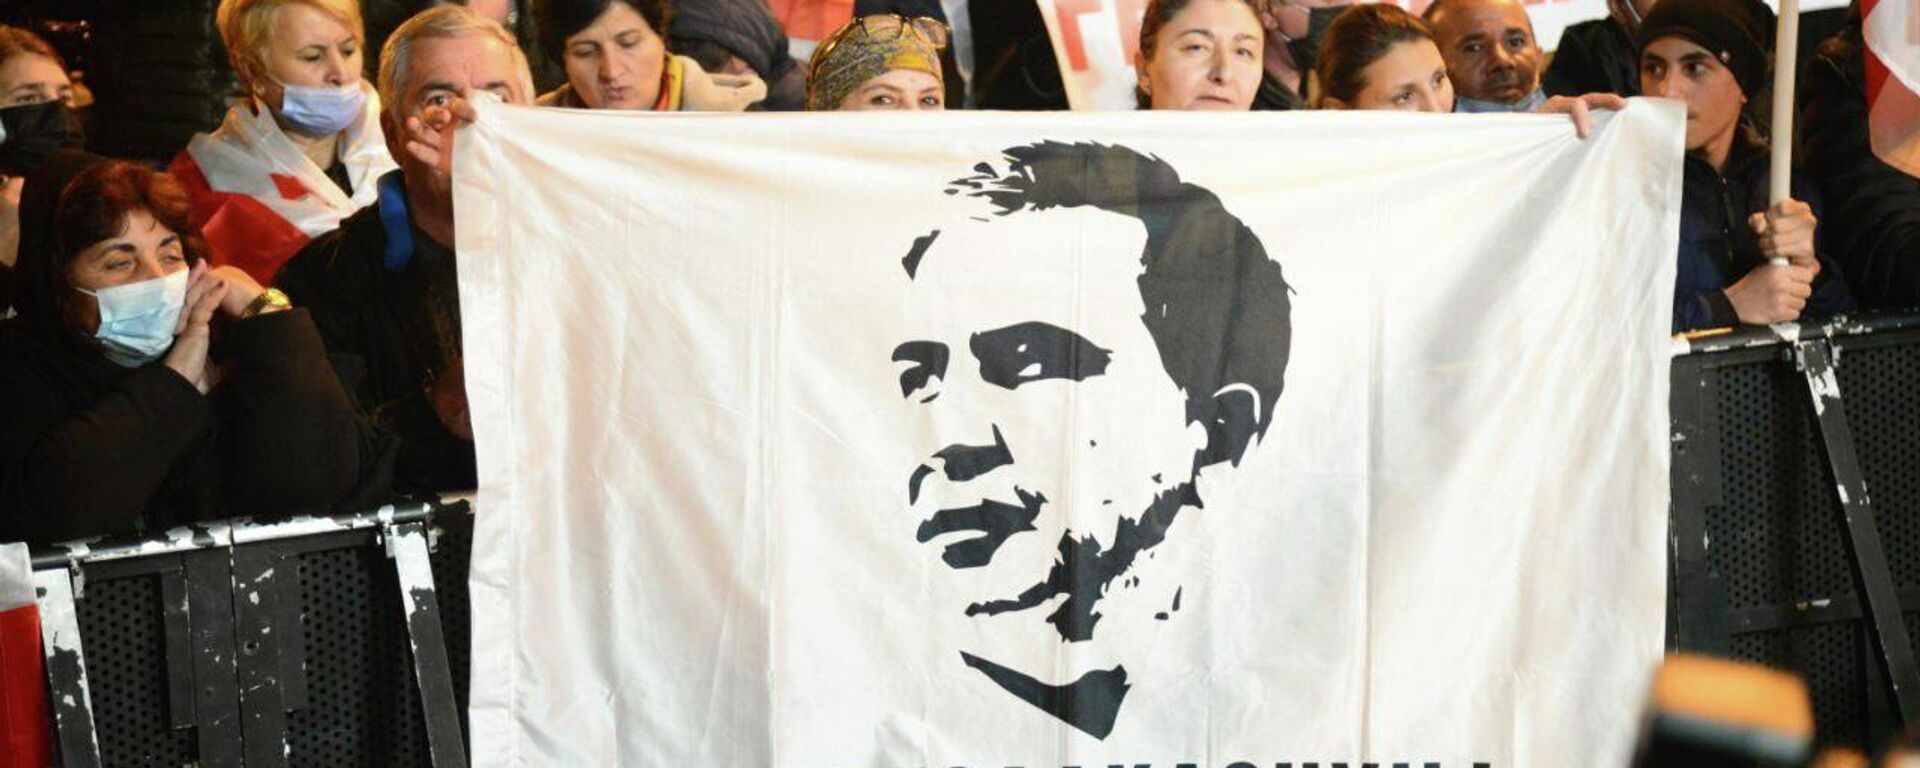 Плакат Свободу Саакашвили. Акция протеста сторонников ЕНД и Саакашвили на площади Свободы 8 ноября 2021 года - Sputnik Грузия, 1920, 22.11.2021